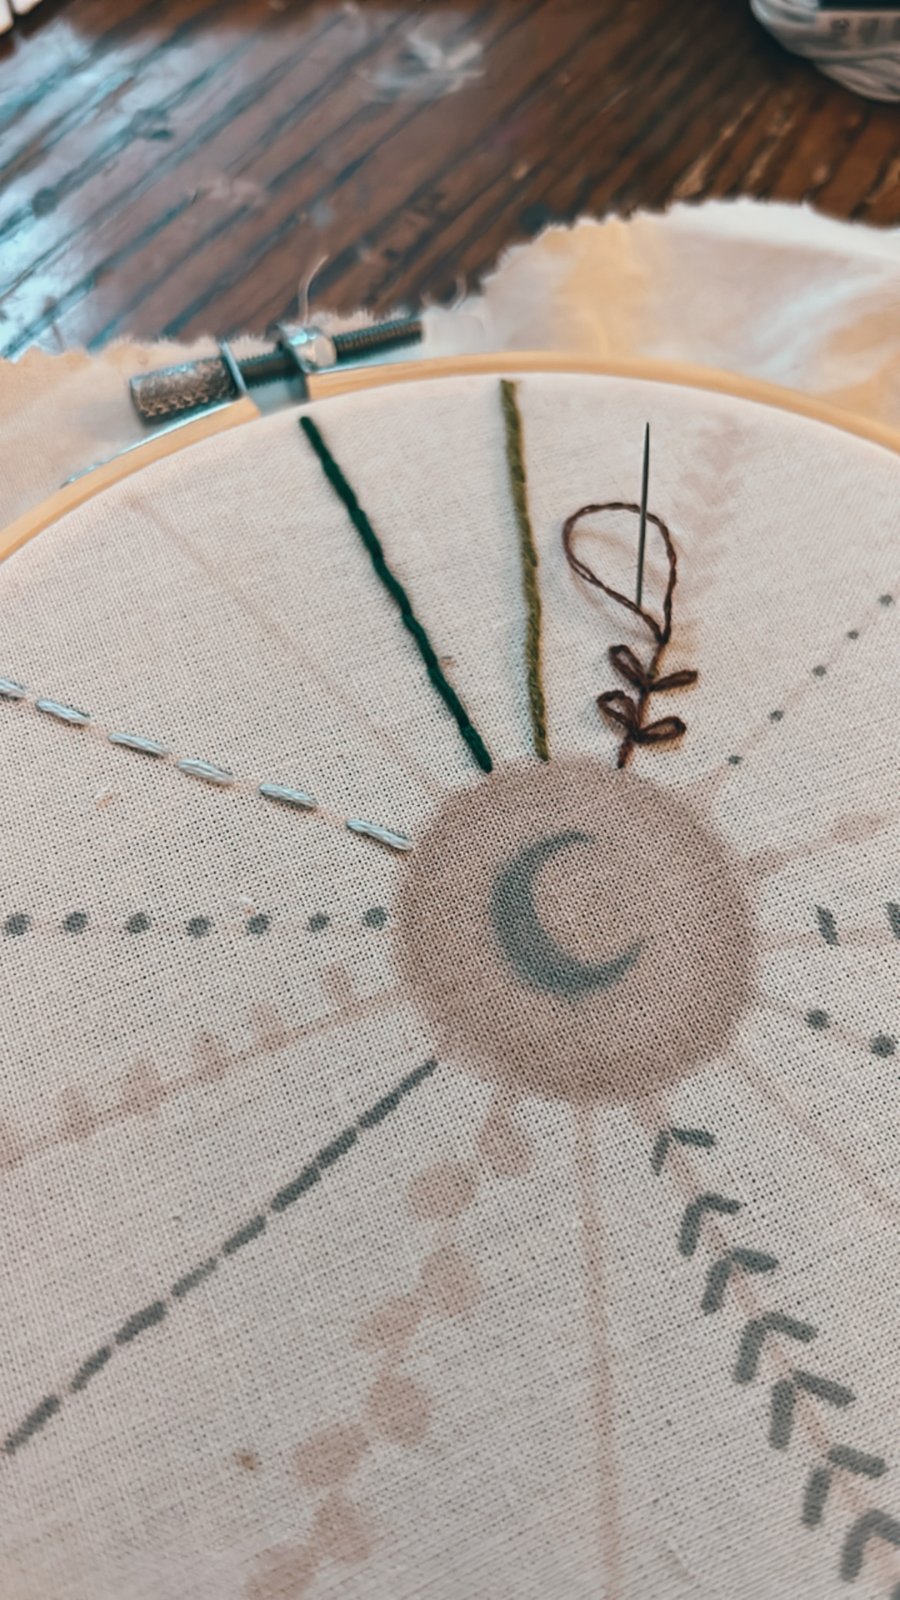 Starter Kit for Embroidery Beginners